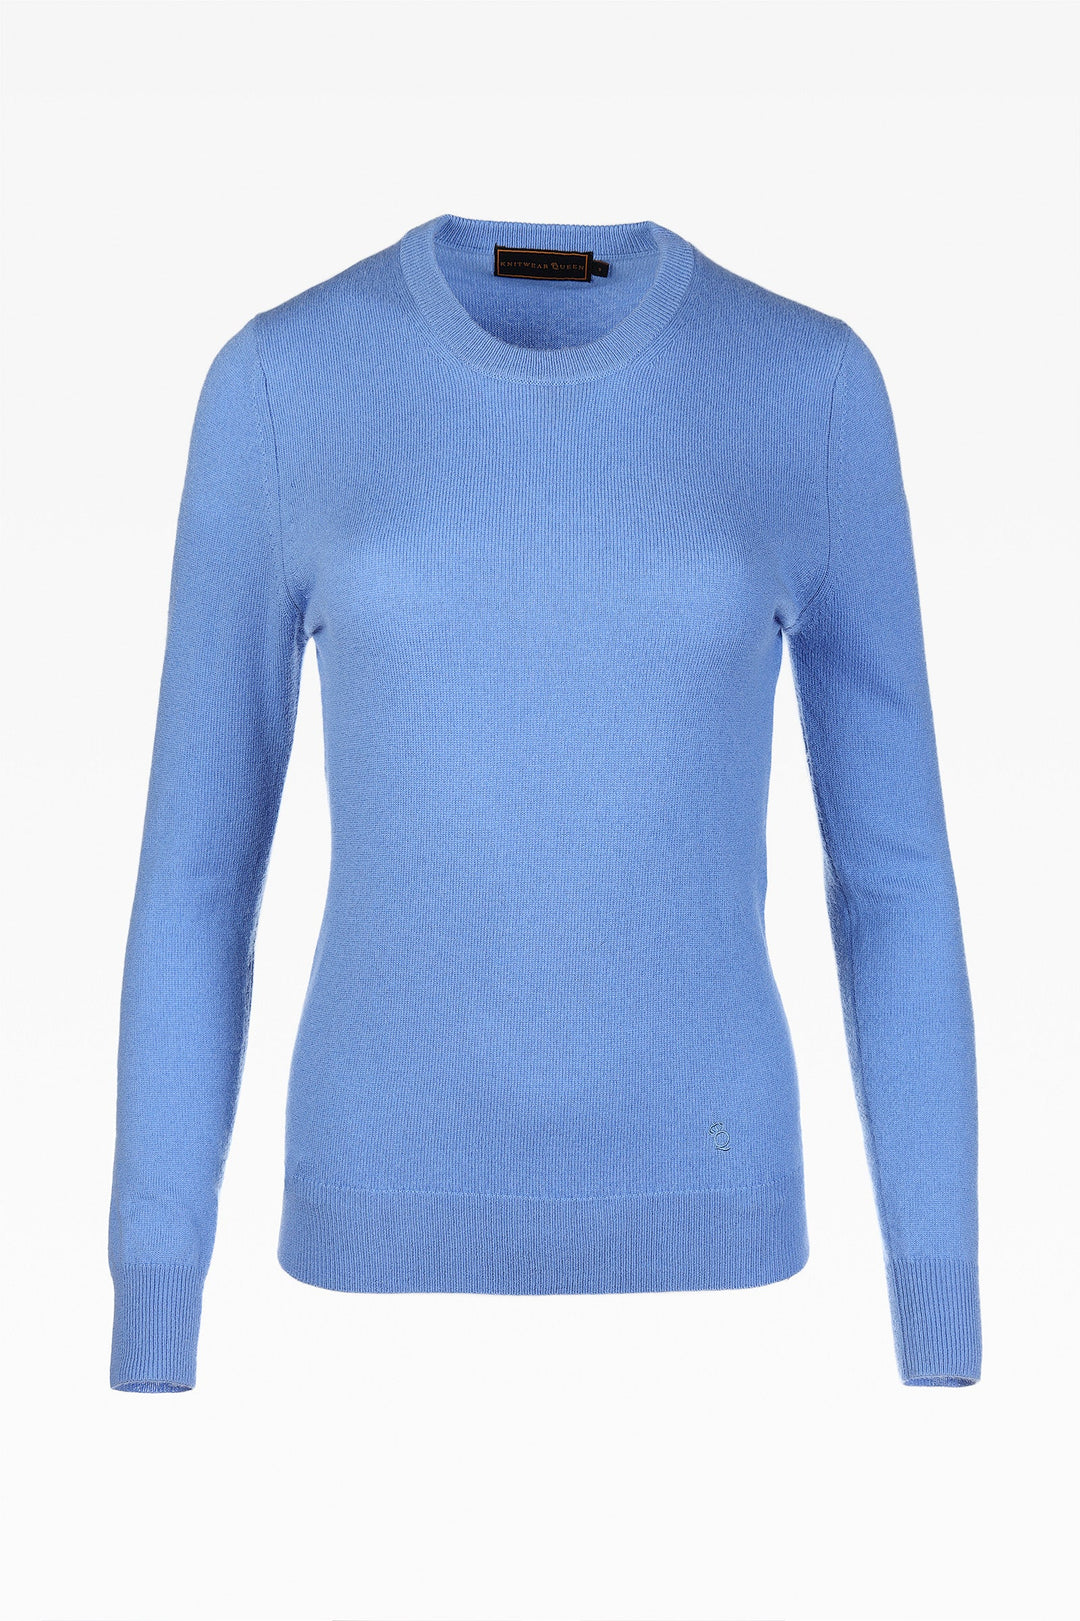 Ella Ladies Crew Neck in Blue Whale: Premium Cashmere & Wool Blend